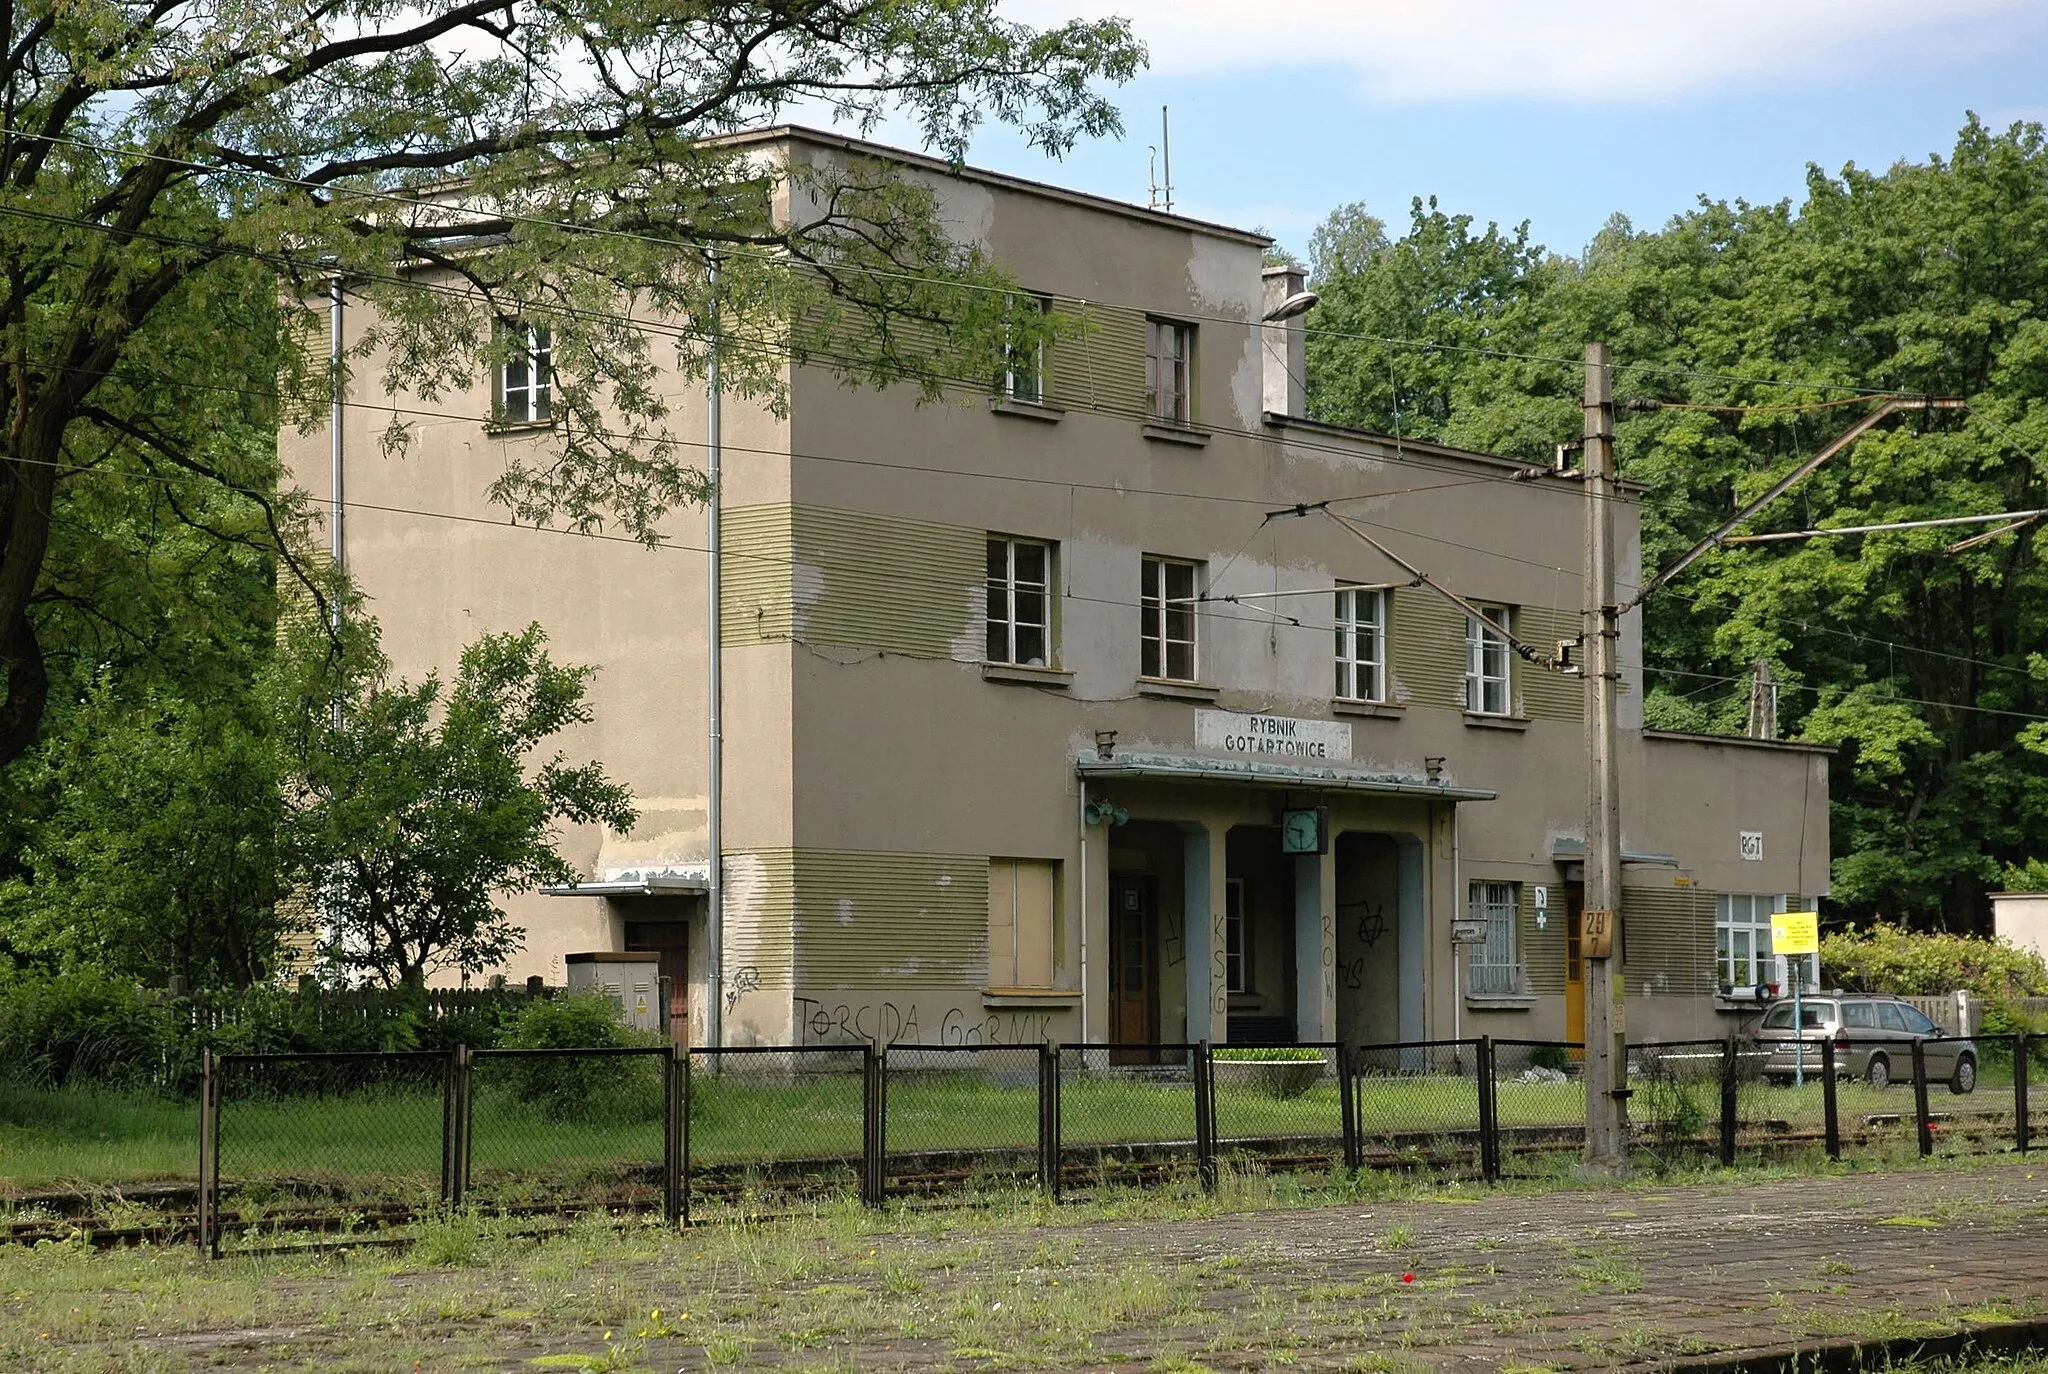 Photo showing: Rybnik Gotartowice railway station, Poland